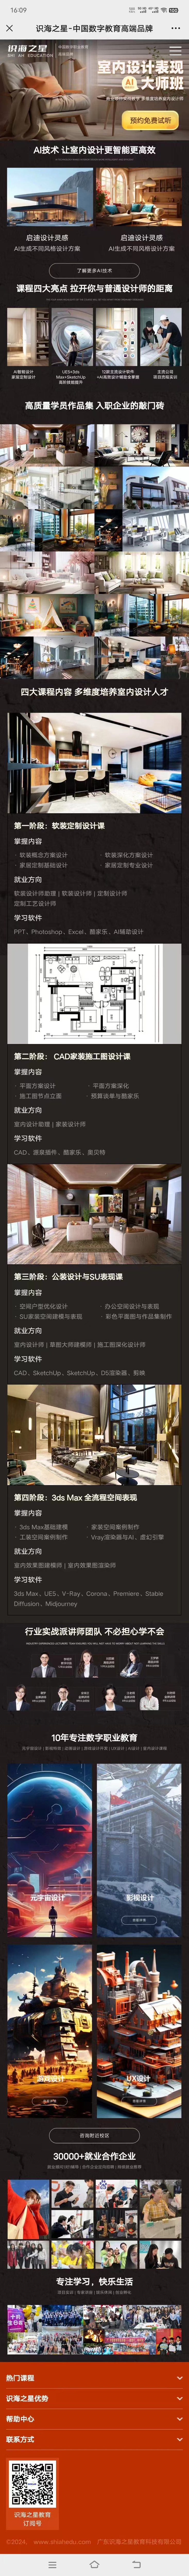 html5 识海之星-中国数字教育高端品牌 手机端网站开发